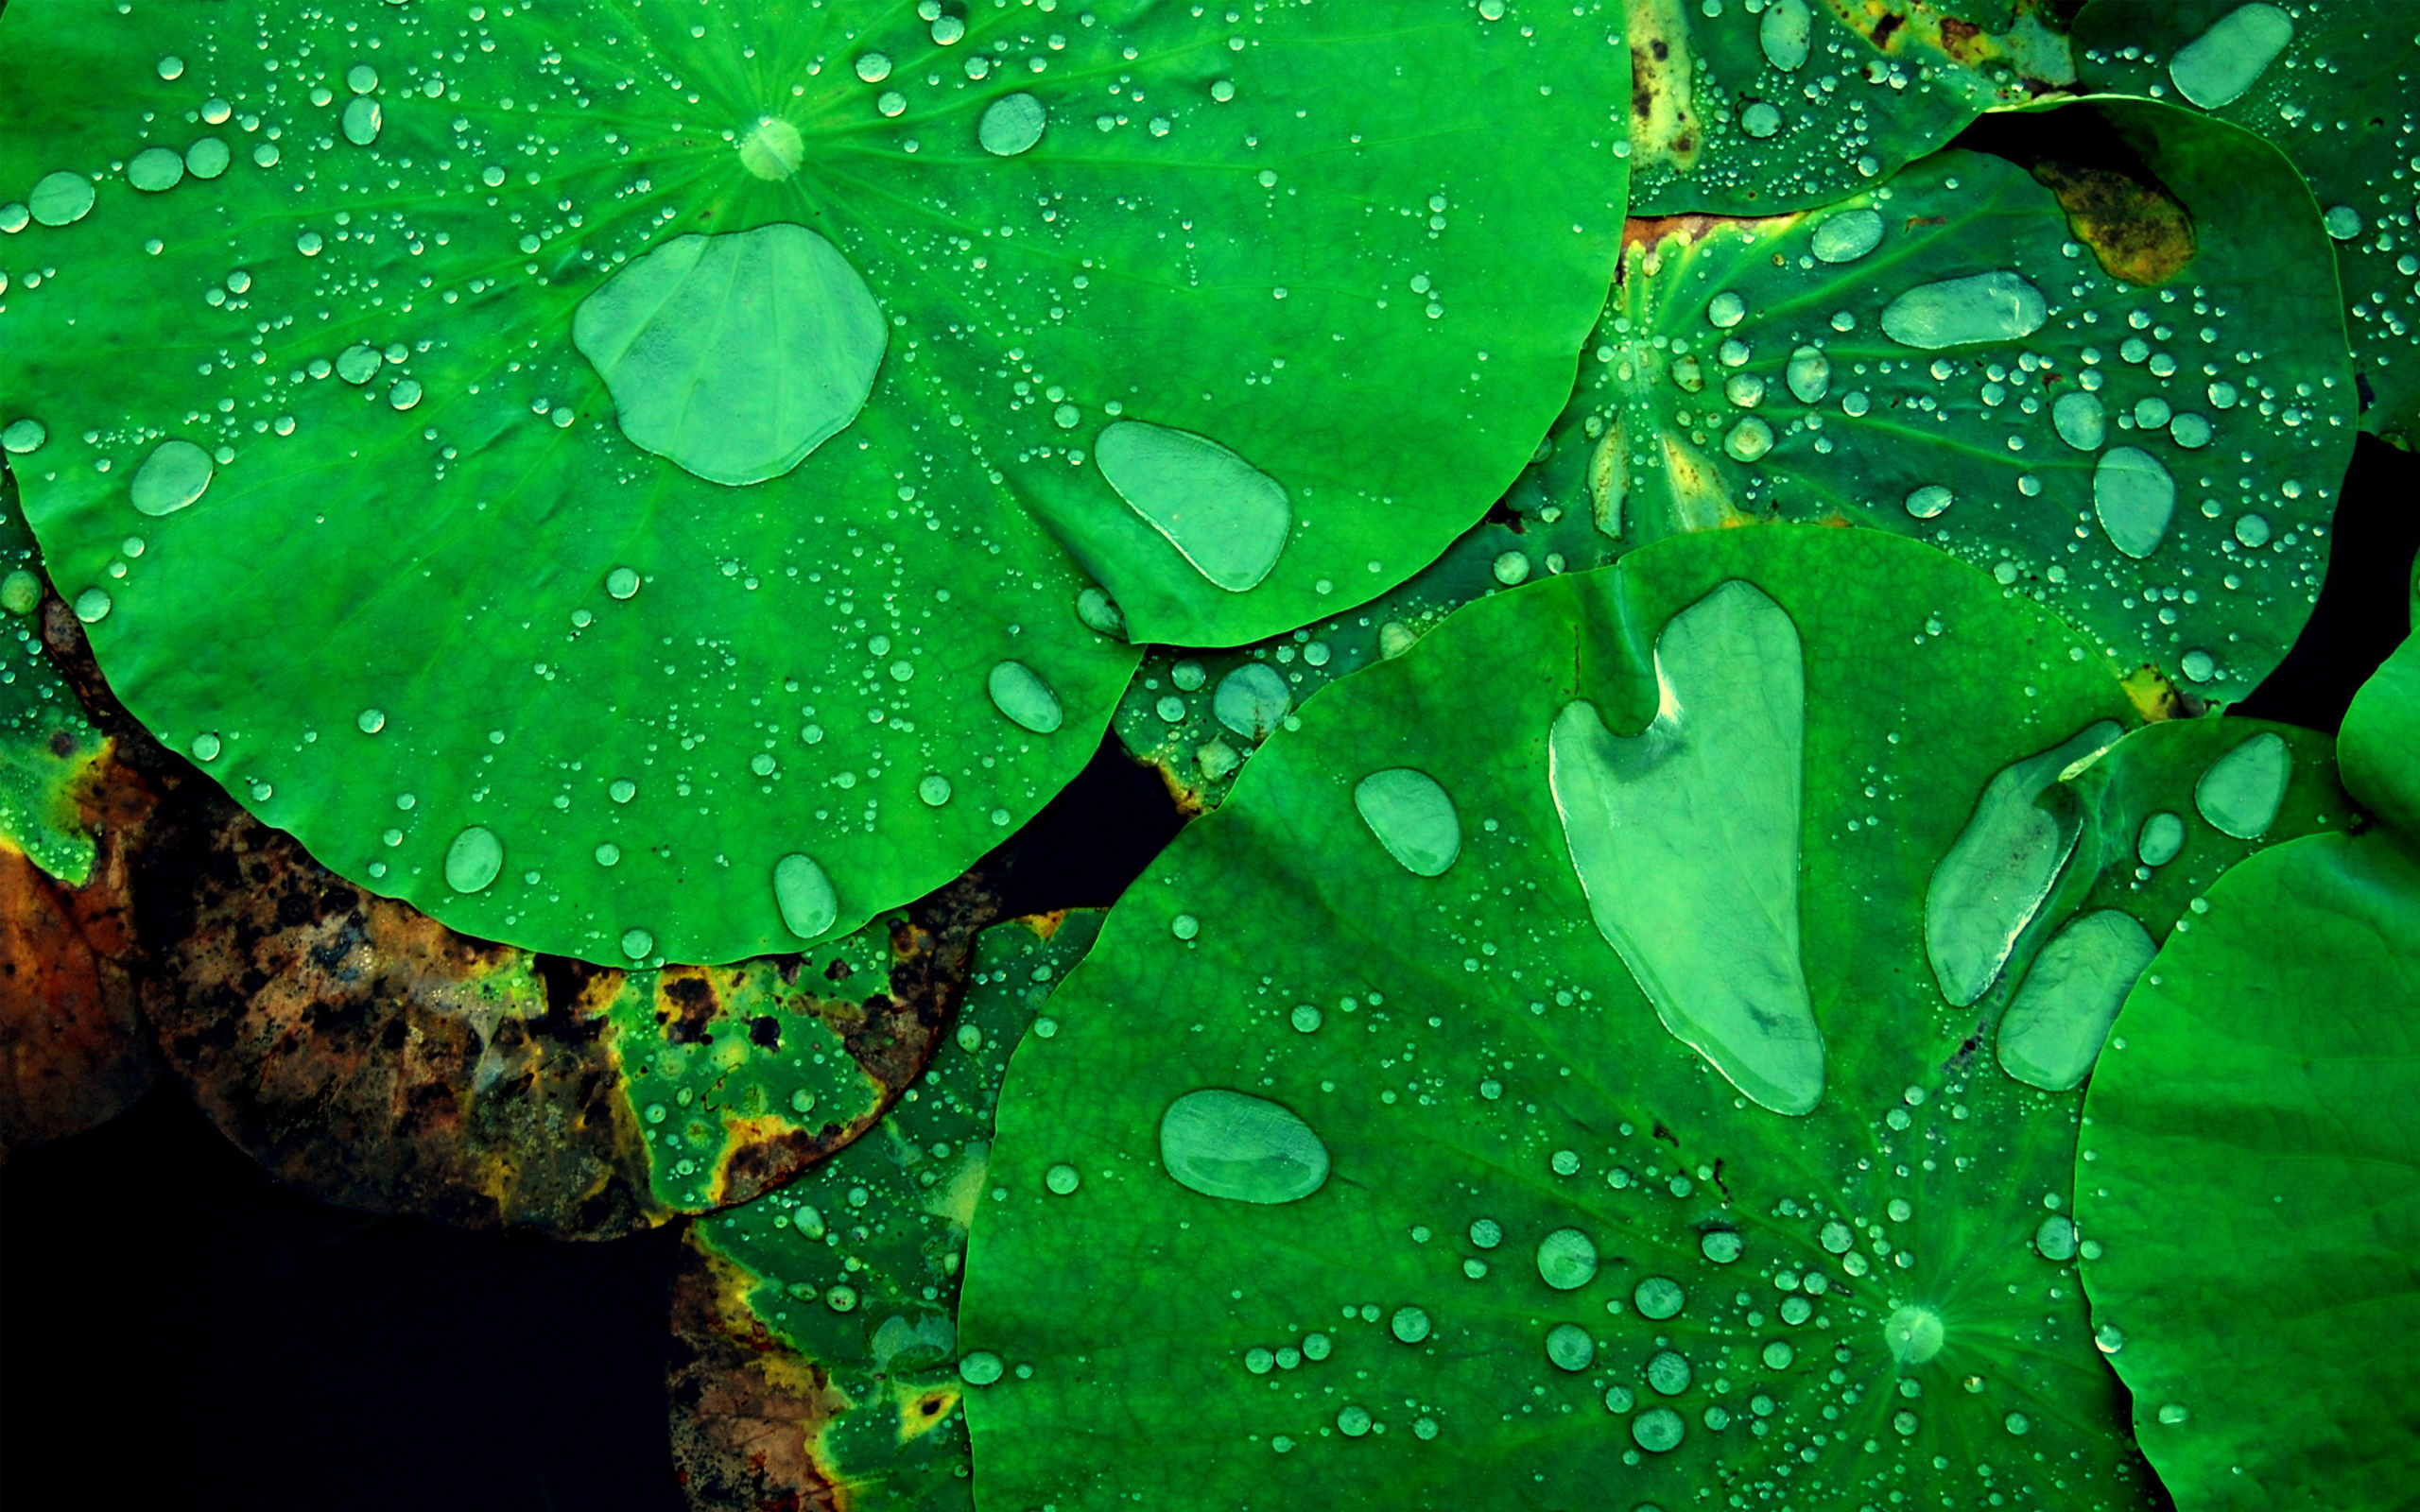 листья лотоса, капли, макро, яркие зеленые обои, Lotus leaves, drops, macro, bright green wallpaper